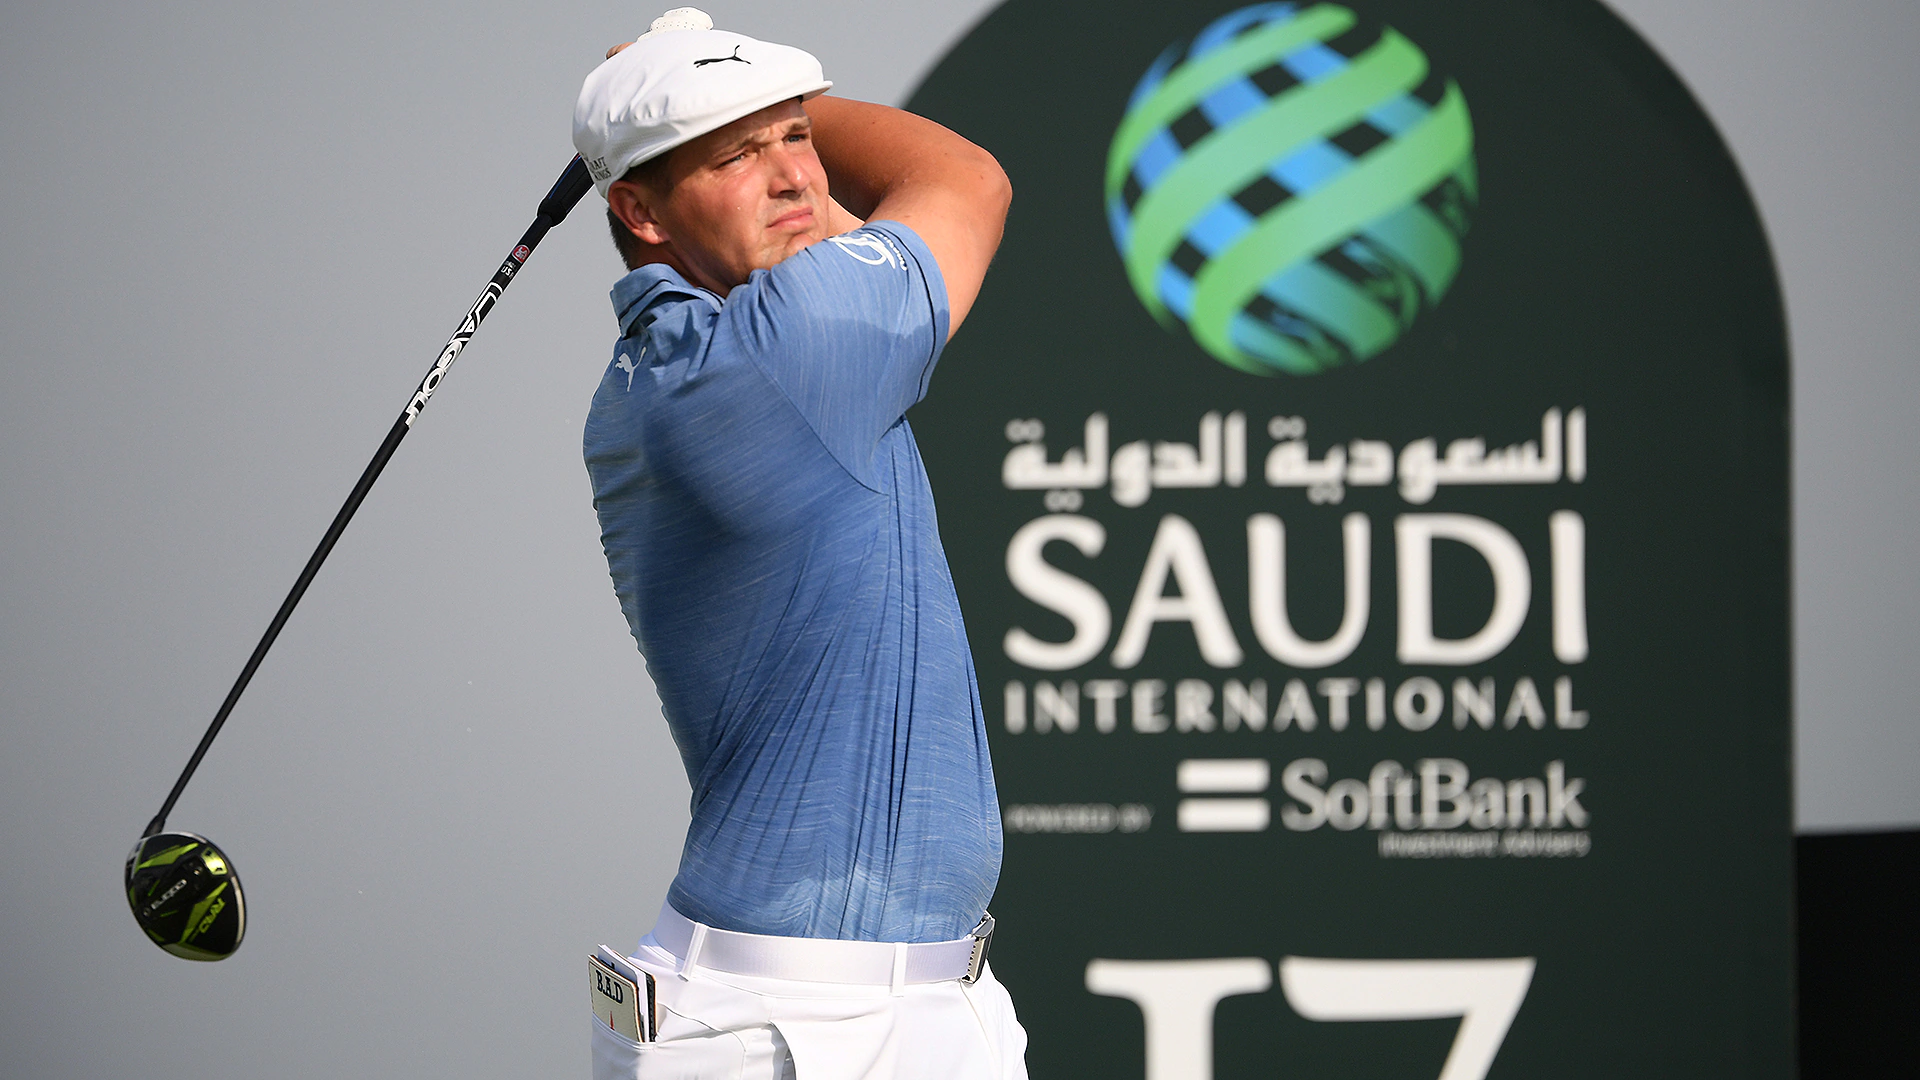 Dustin Johnson, Bryson DeChambeau, Phil Mickelson among field in ’22 Saudi International